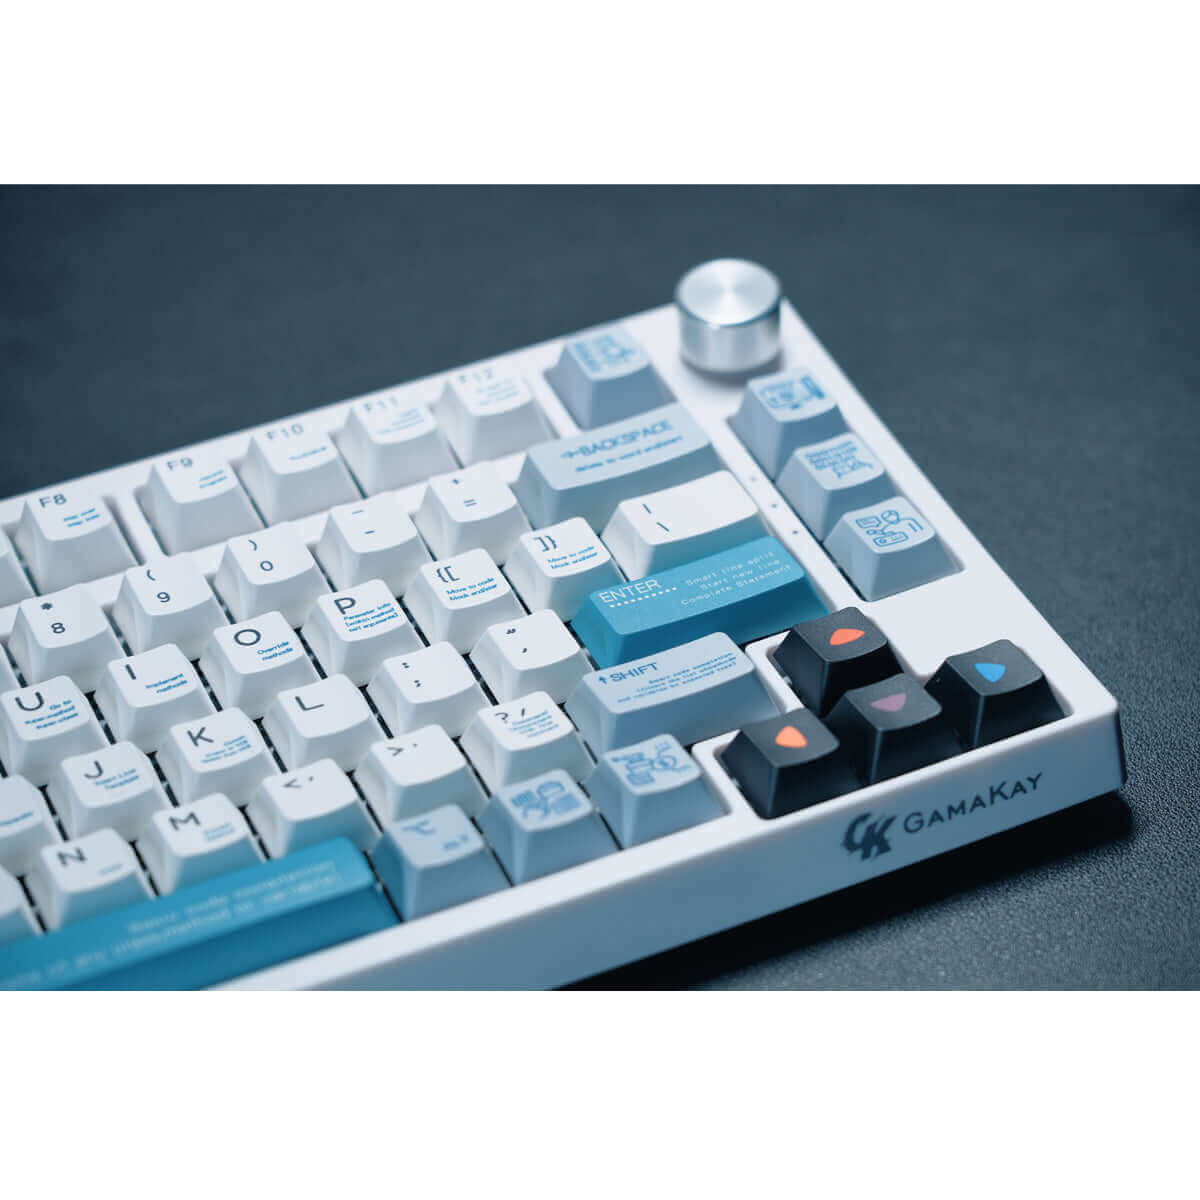 GamaKay TK75 Mechanical Keyboard | 75% RGB Gaming keyboard